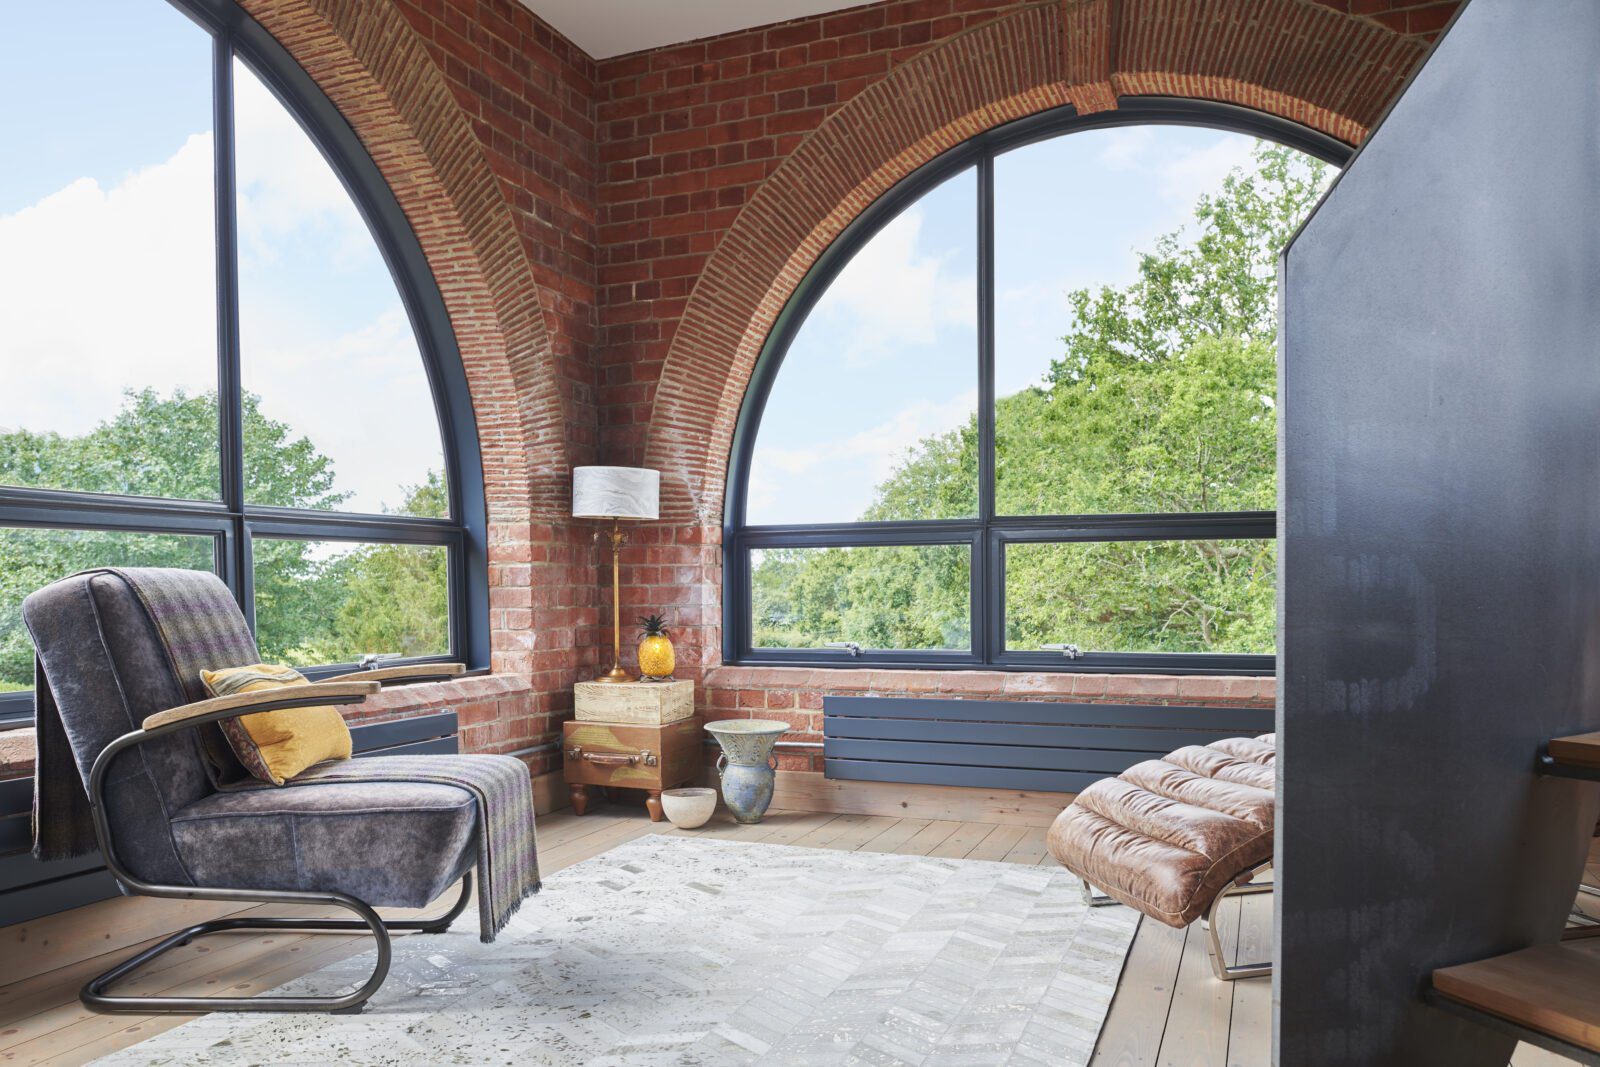 Two large semi-circular metal windows bring the outside in